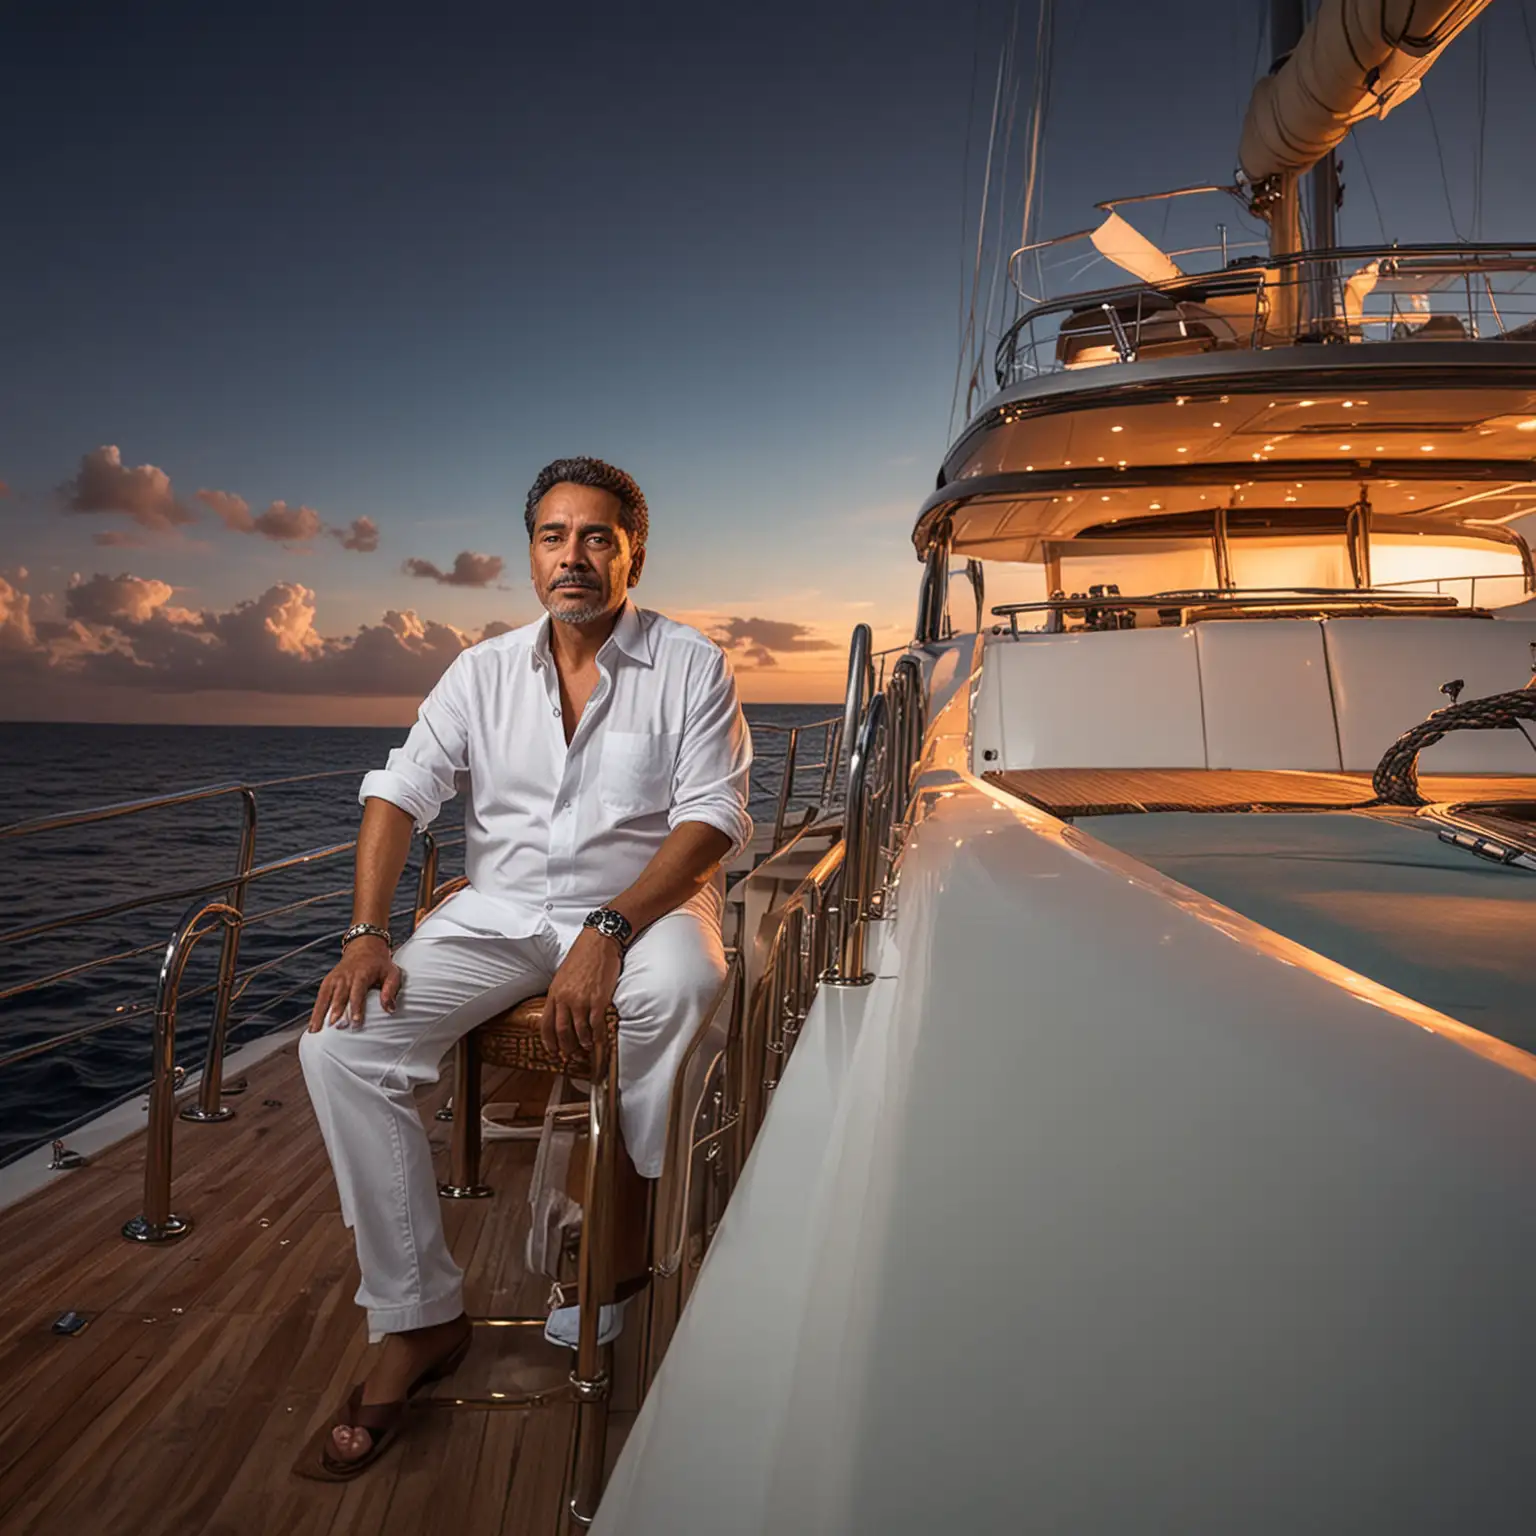 Luxurious Yacht with Confident Hispanic Man on Deck